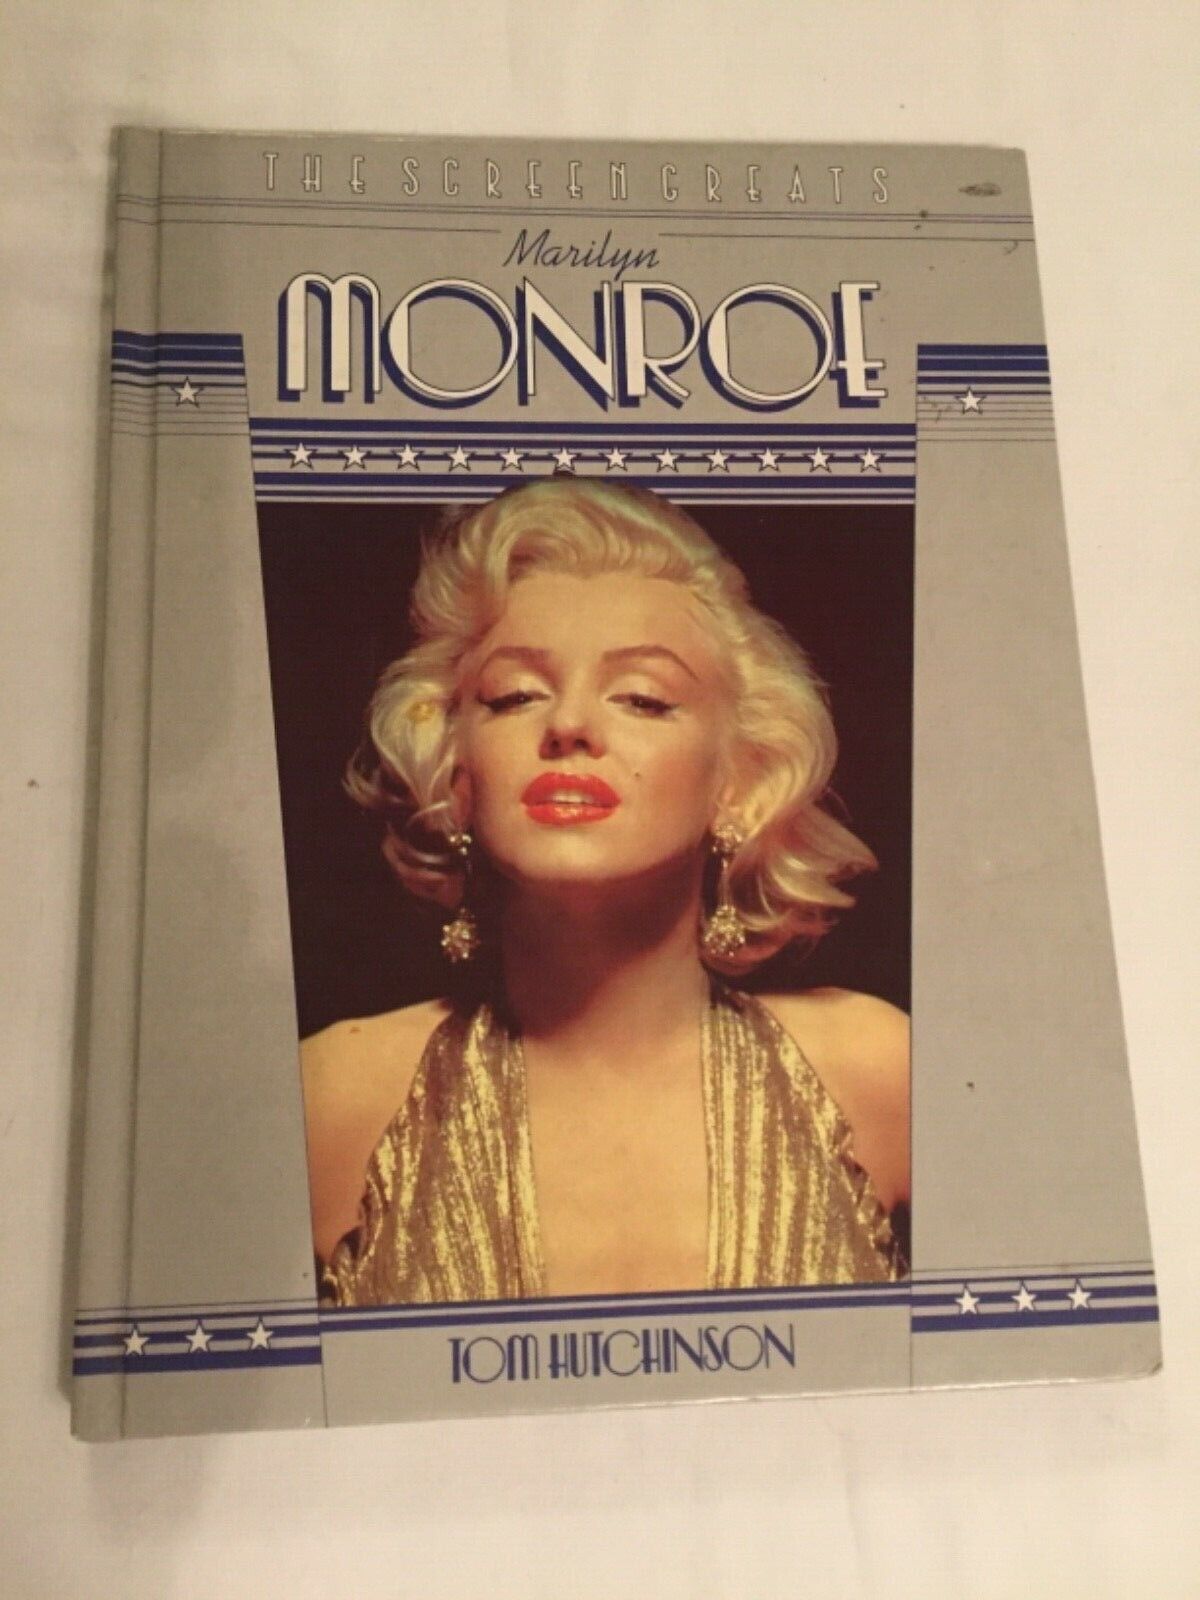 Marilyn Monroe Lot of 8 Photographs Post cards 50th Anniversary Edition Books  Без бренда - фотография #3